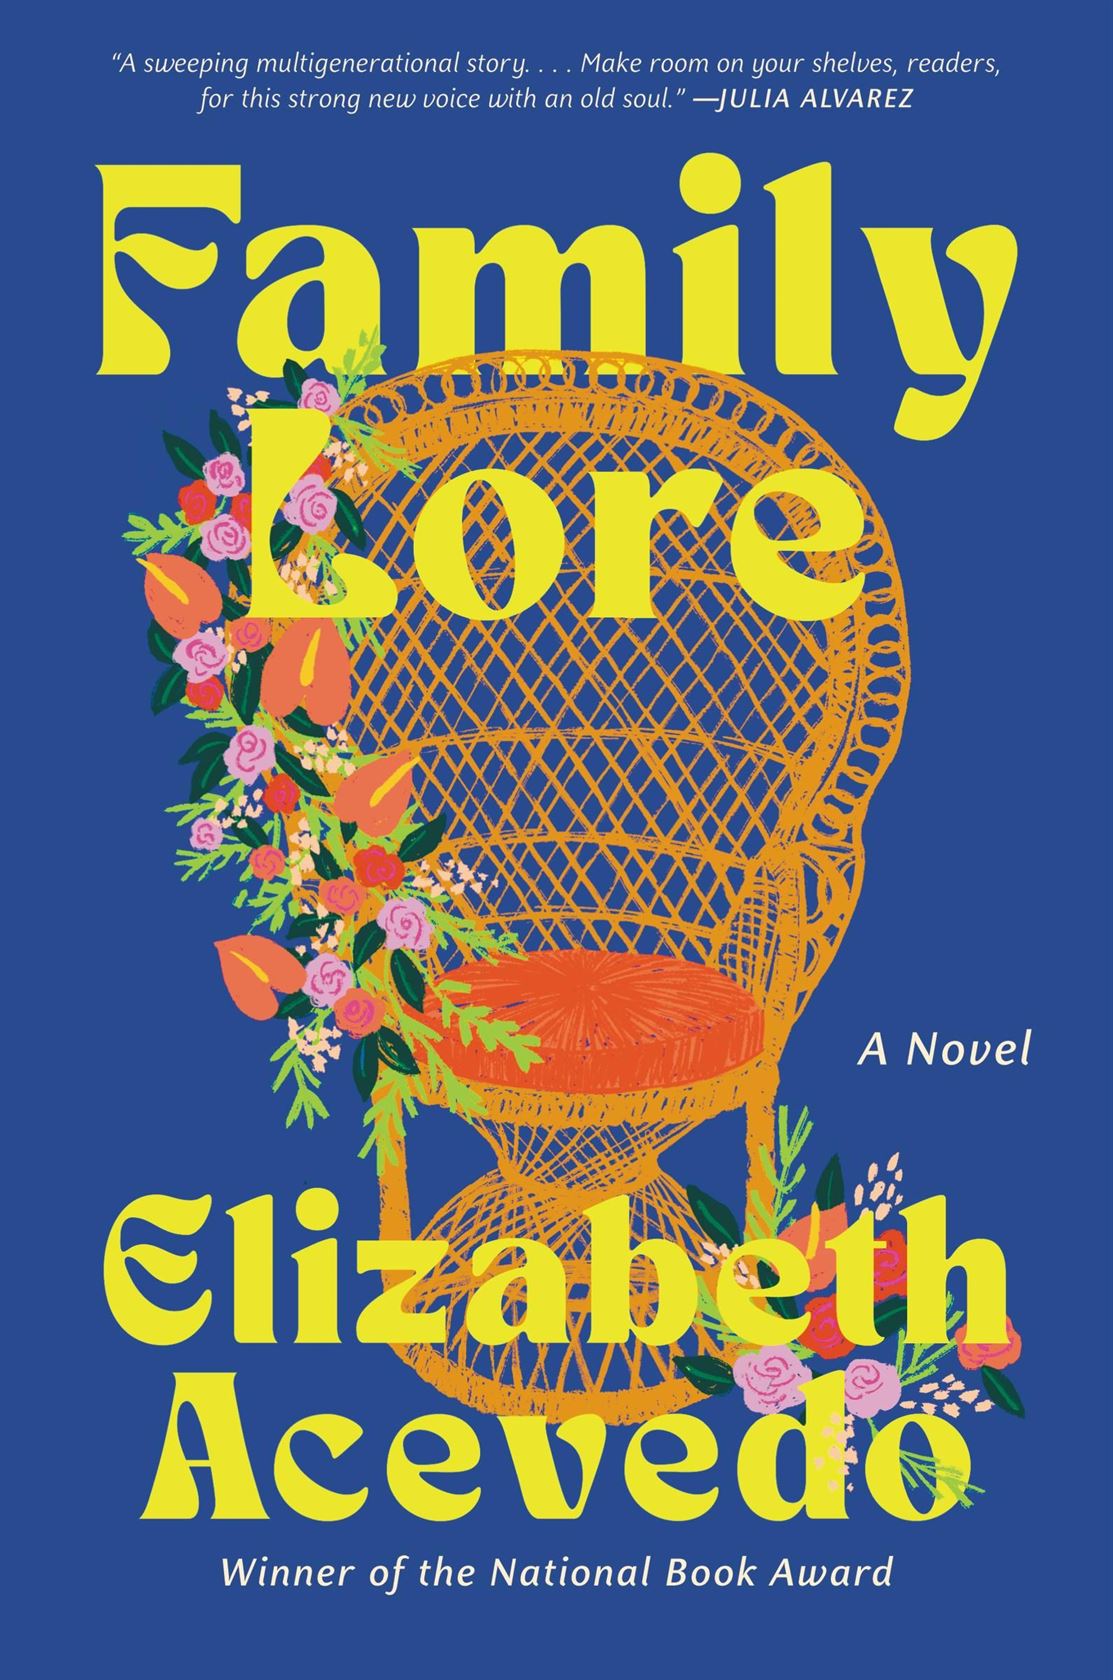 "Family Lore" by Elizabeth Acevedo is being released Aug. 1.
Photo courtesy of Elizabeth Acevedo